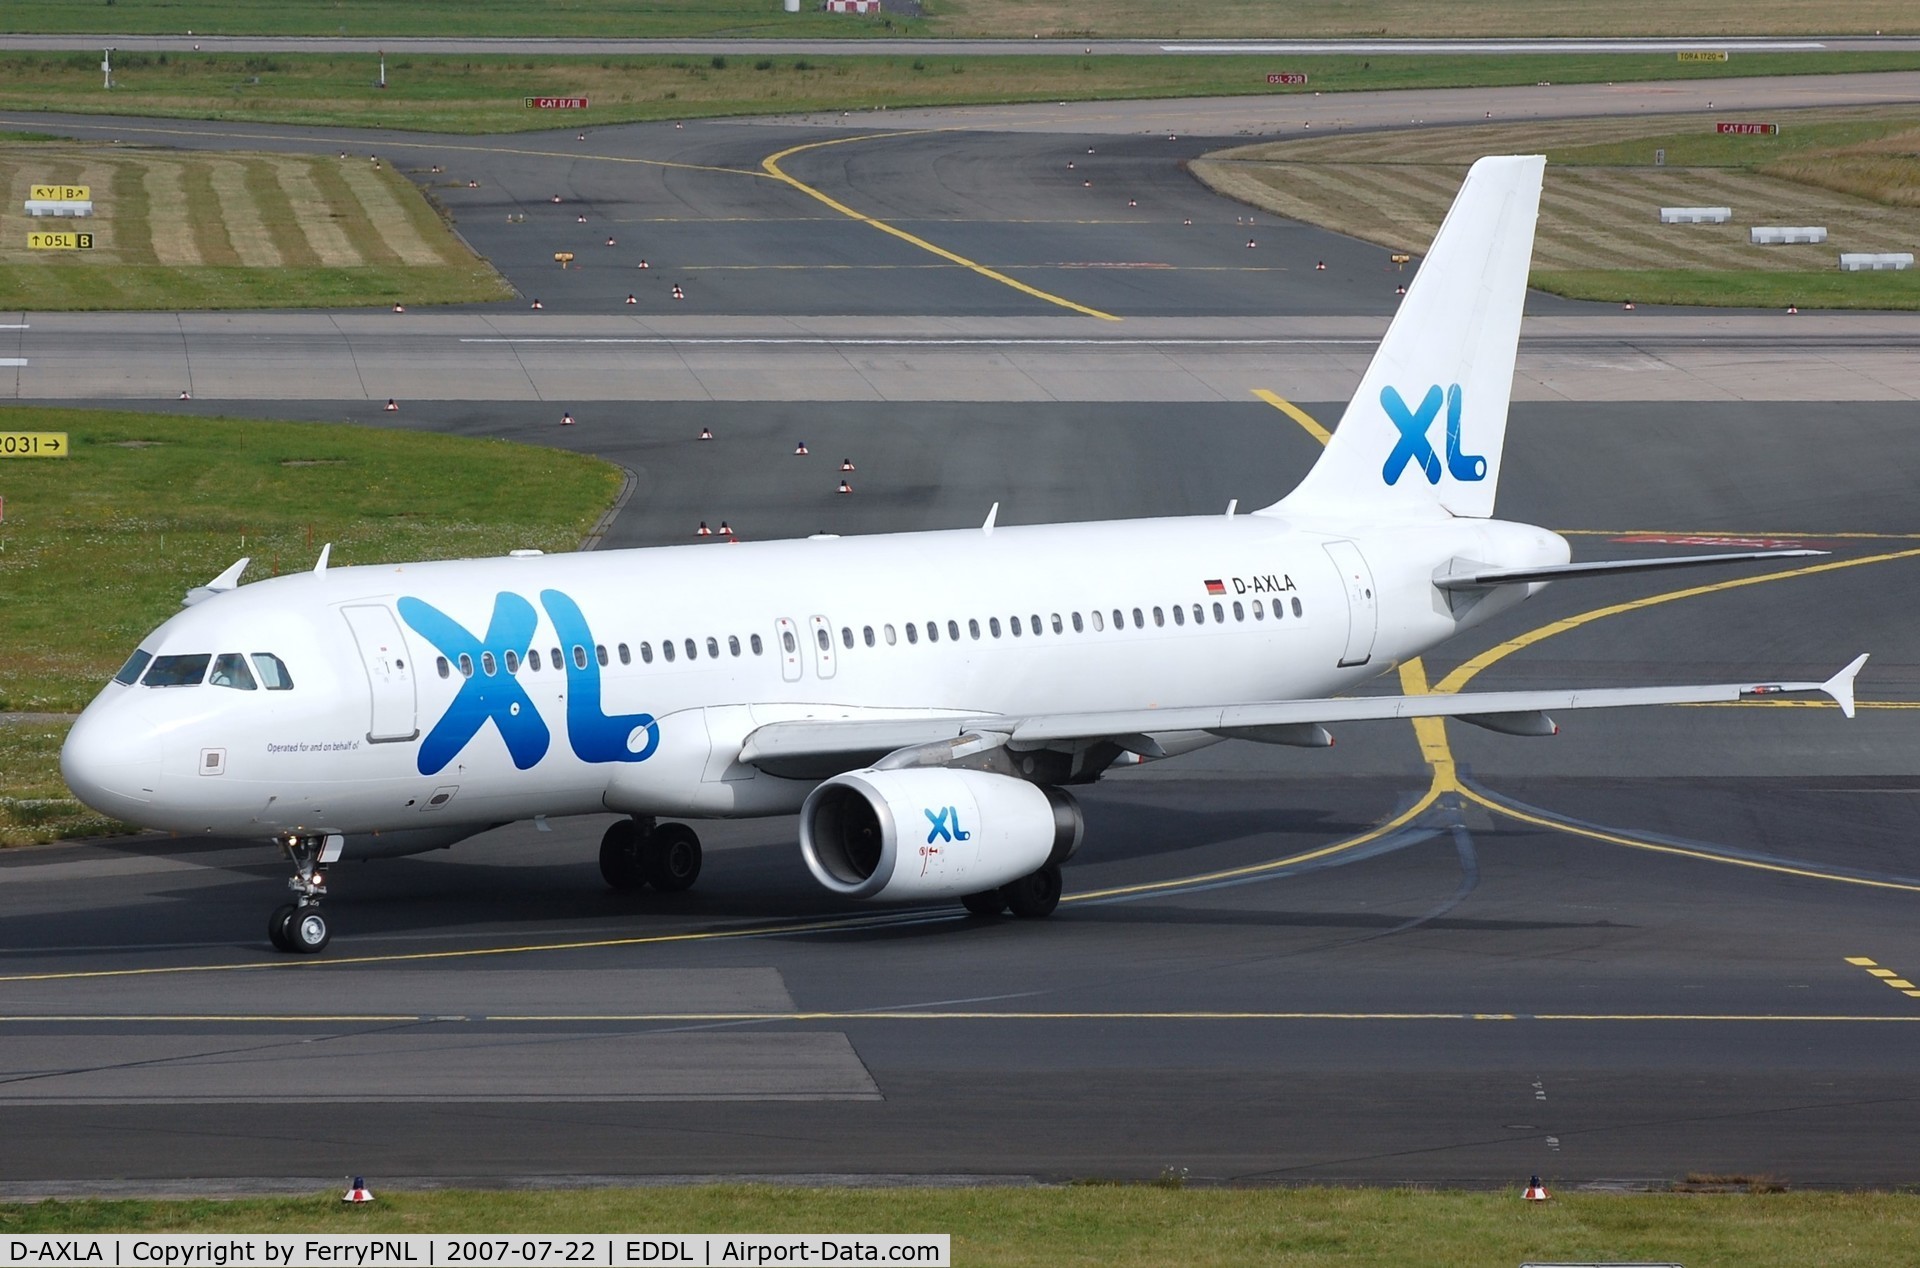 D-AXLA, 2005 Airbus A320-232 C/N 2500, XL A320. Aircraft crashed in Nov 2008.